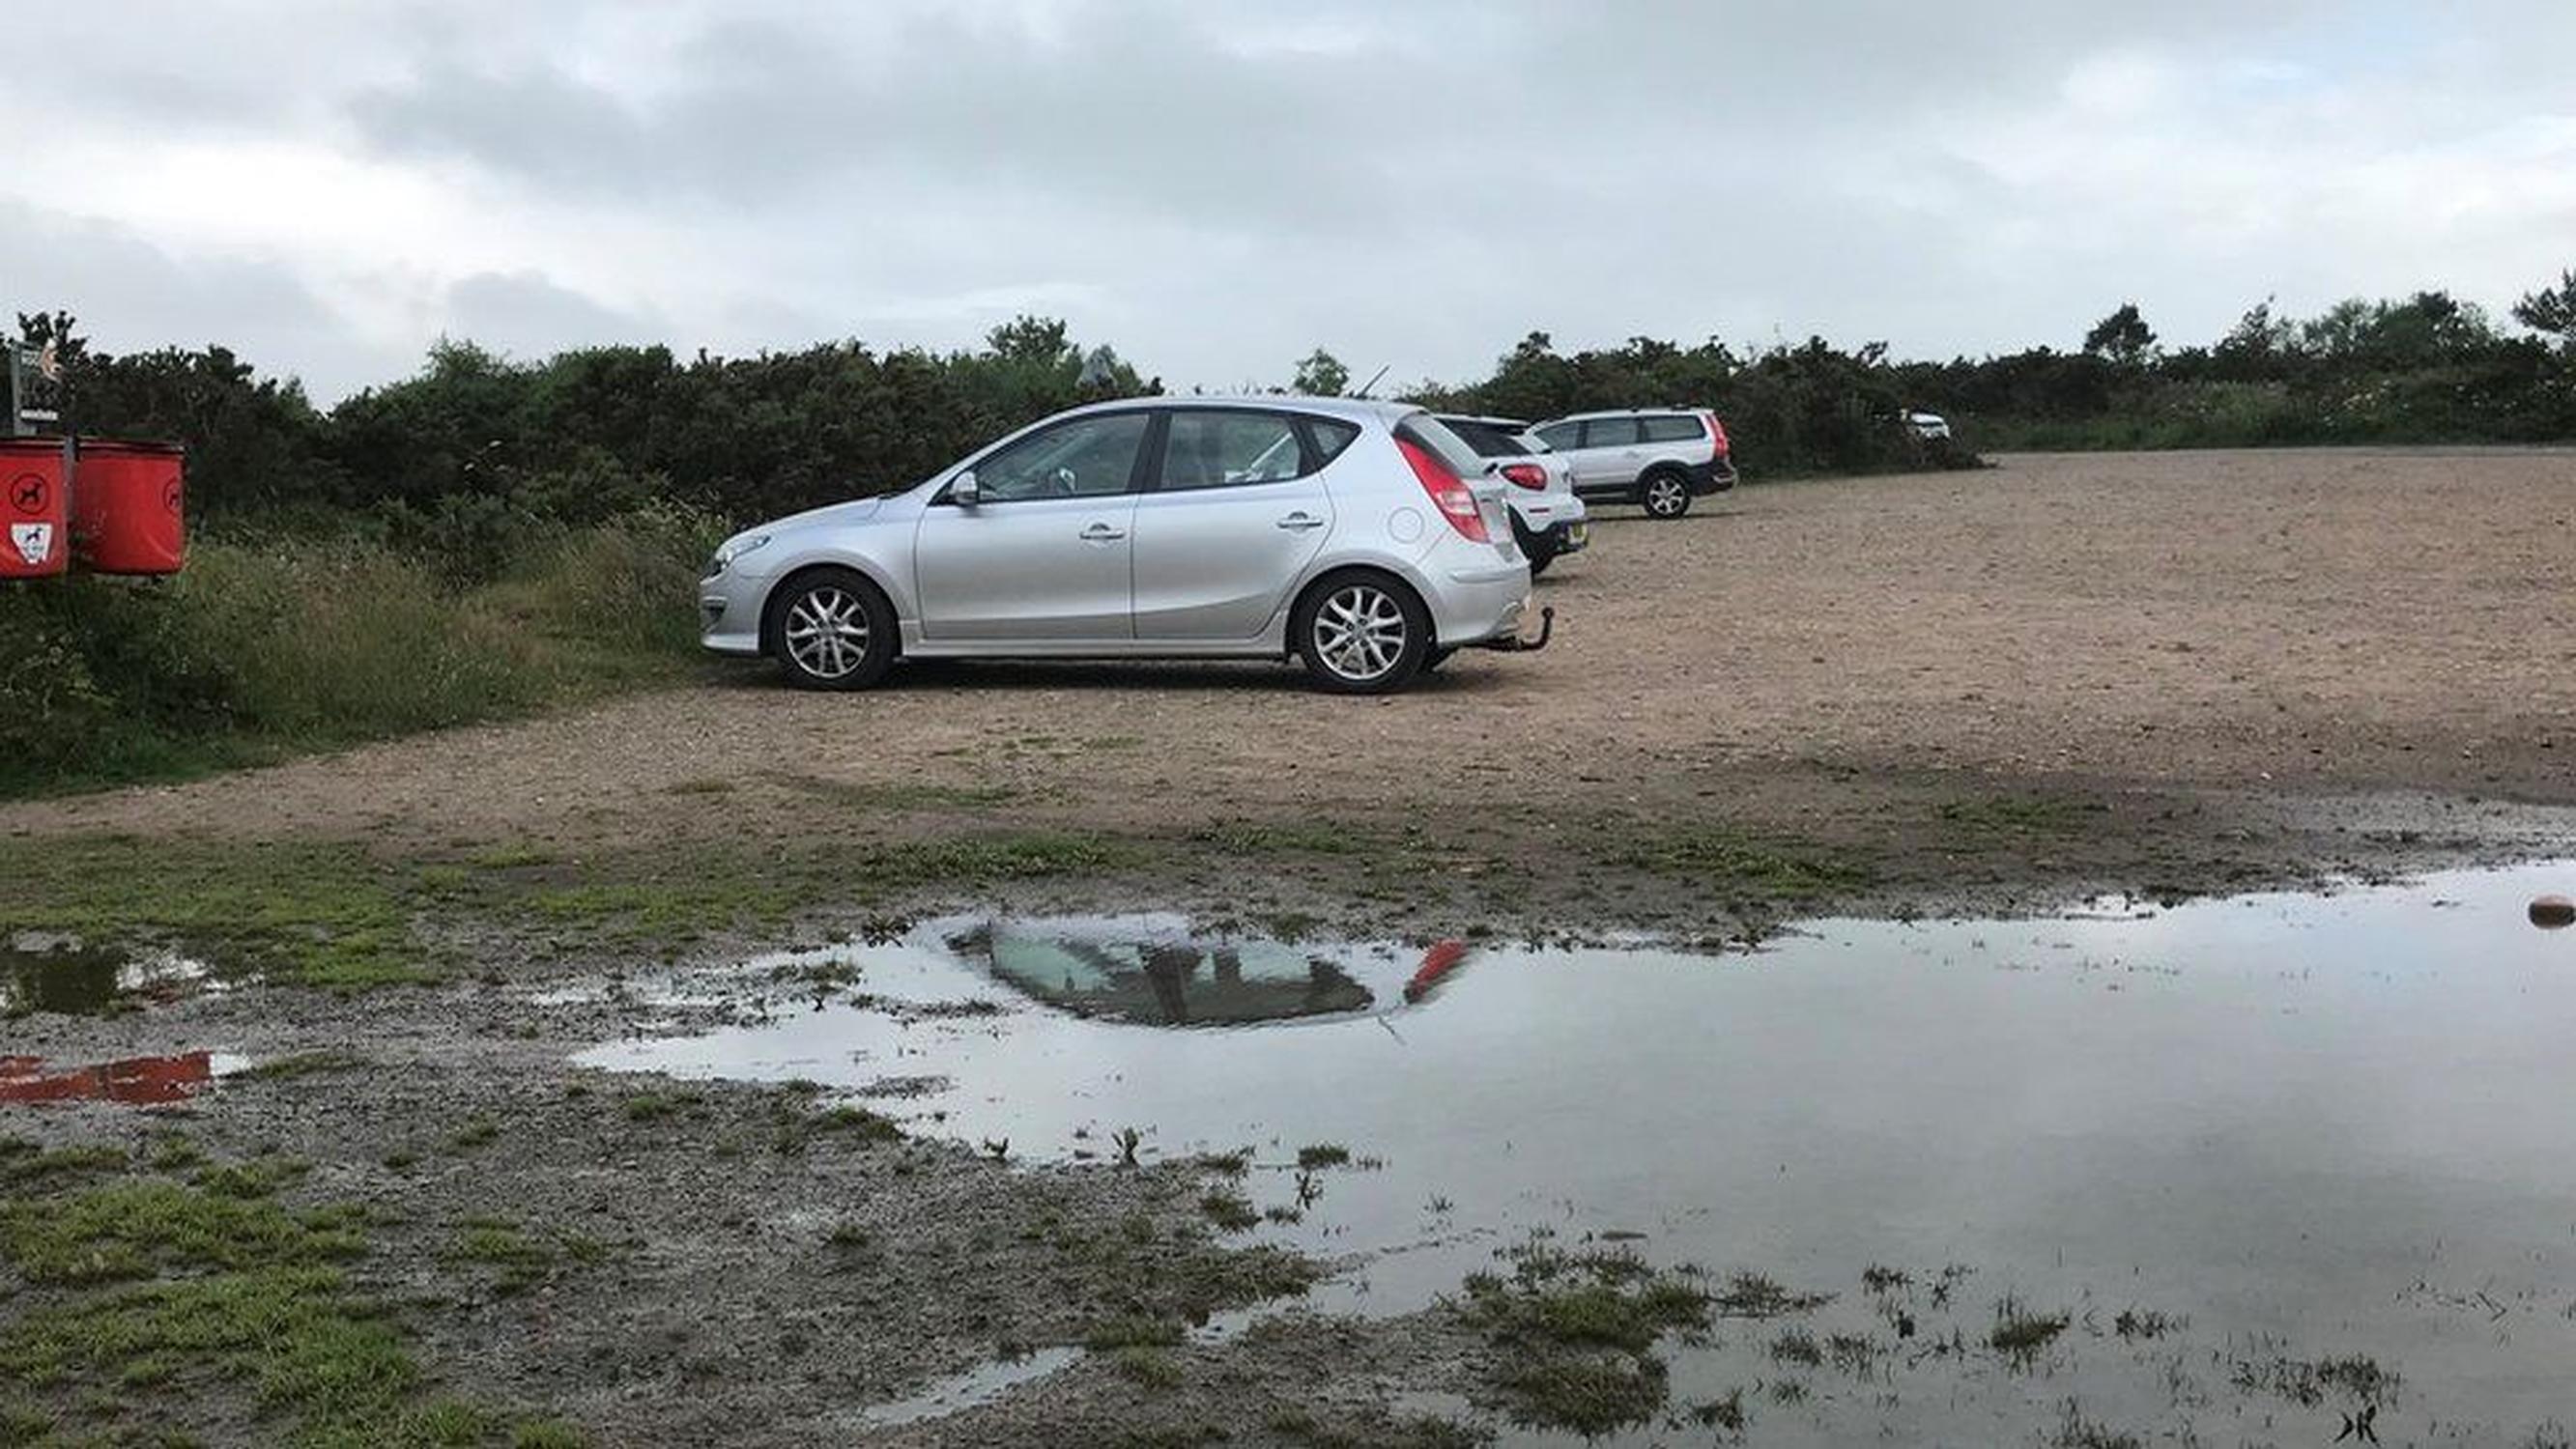 Parking at Pebblebed Heath (South East Devon Habitat Regulations Partnership)